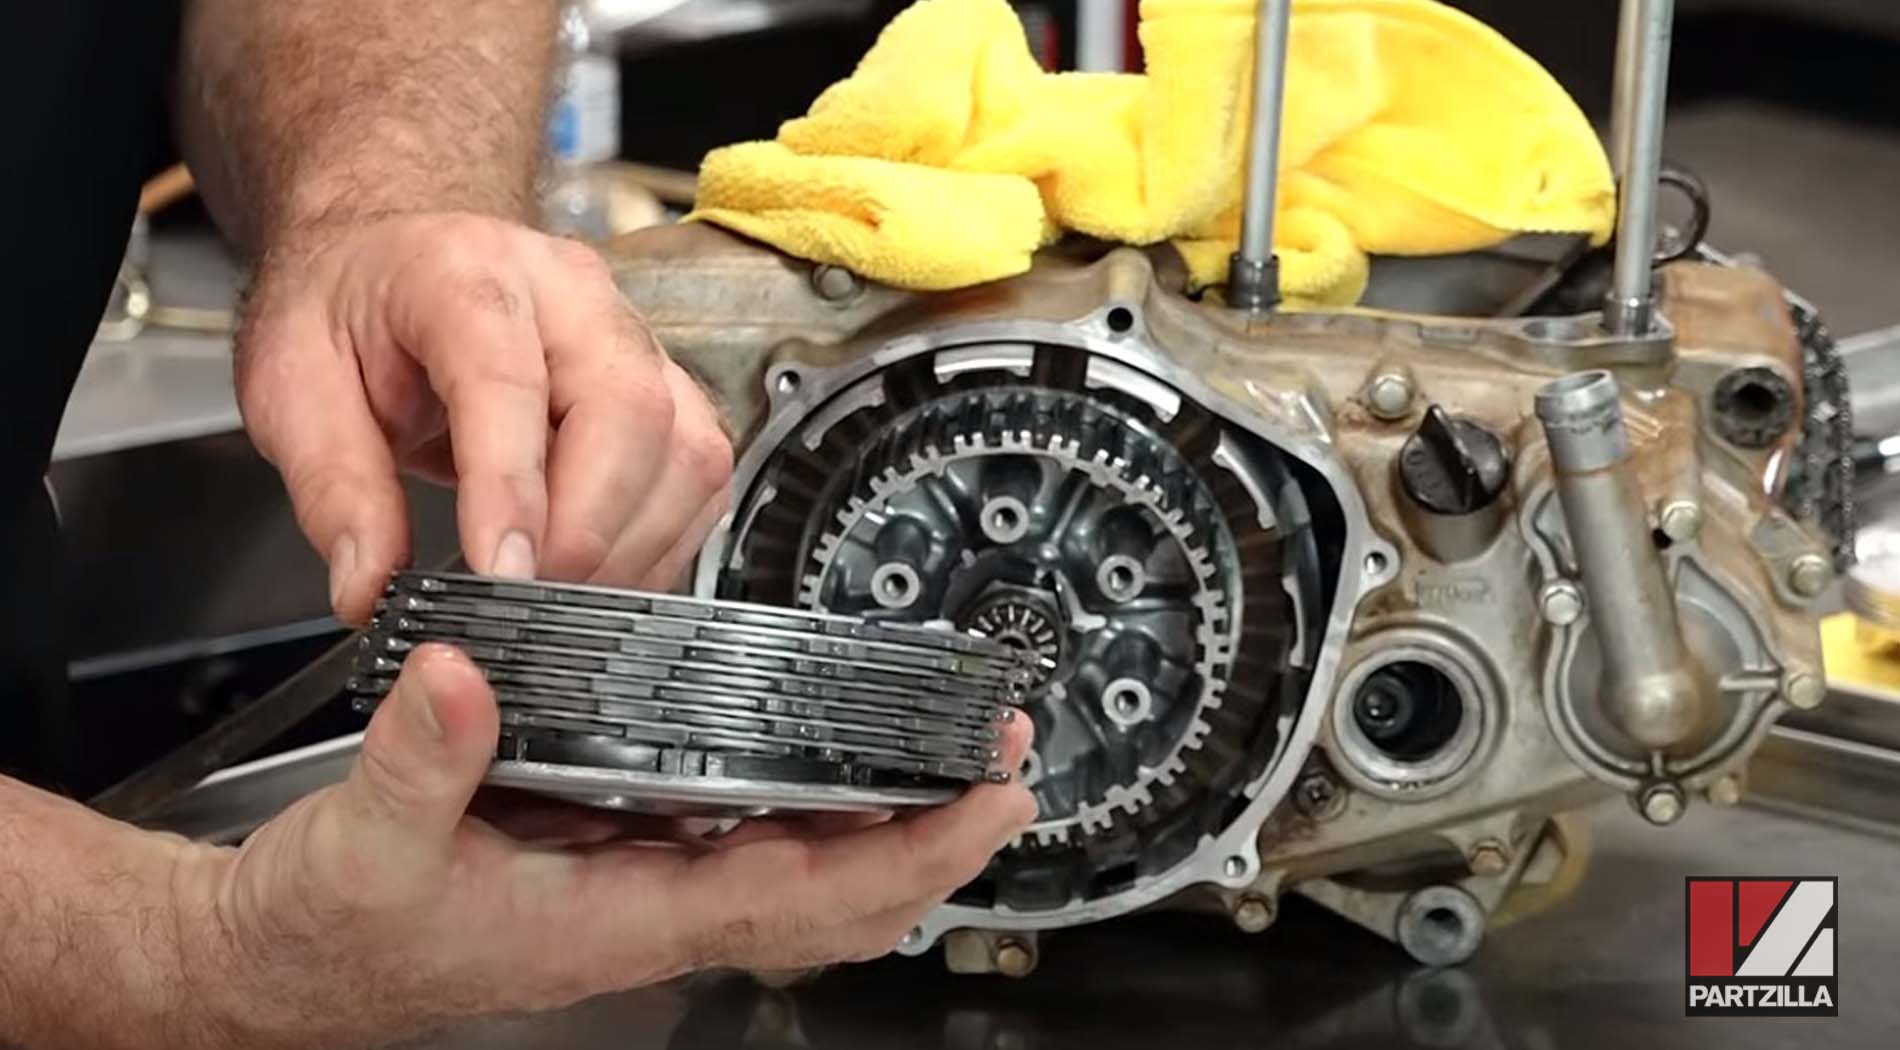 Honda CRF450R engine rebuild clutch plates